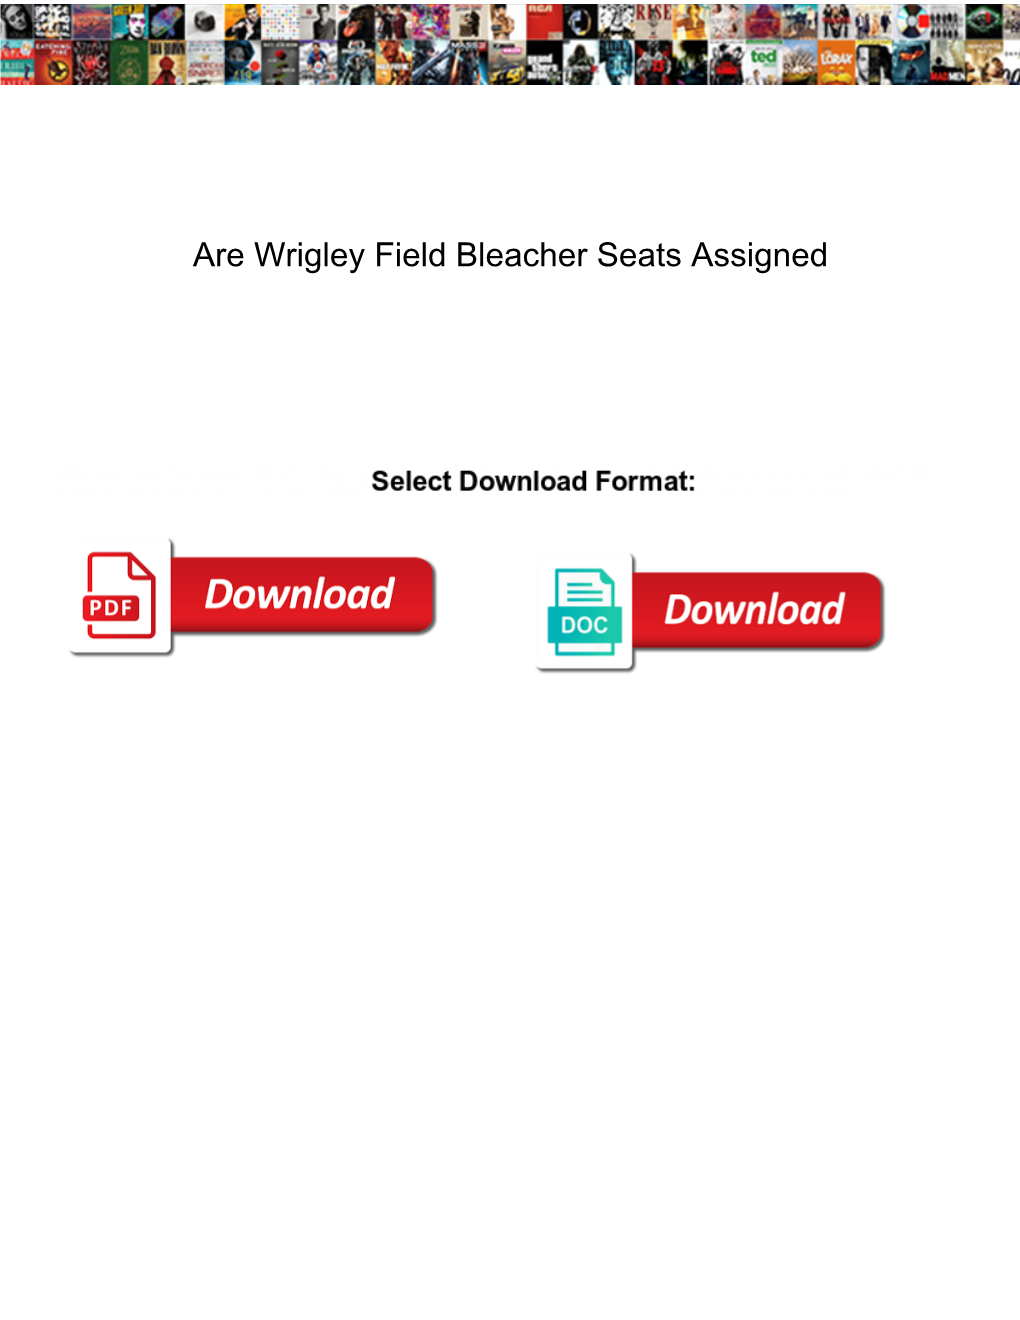 Are Wrigley Field Bleacher Seats Assigned